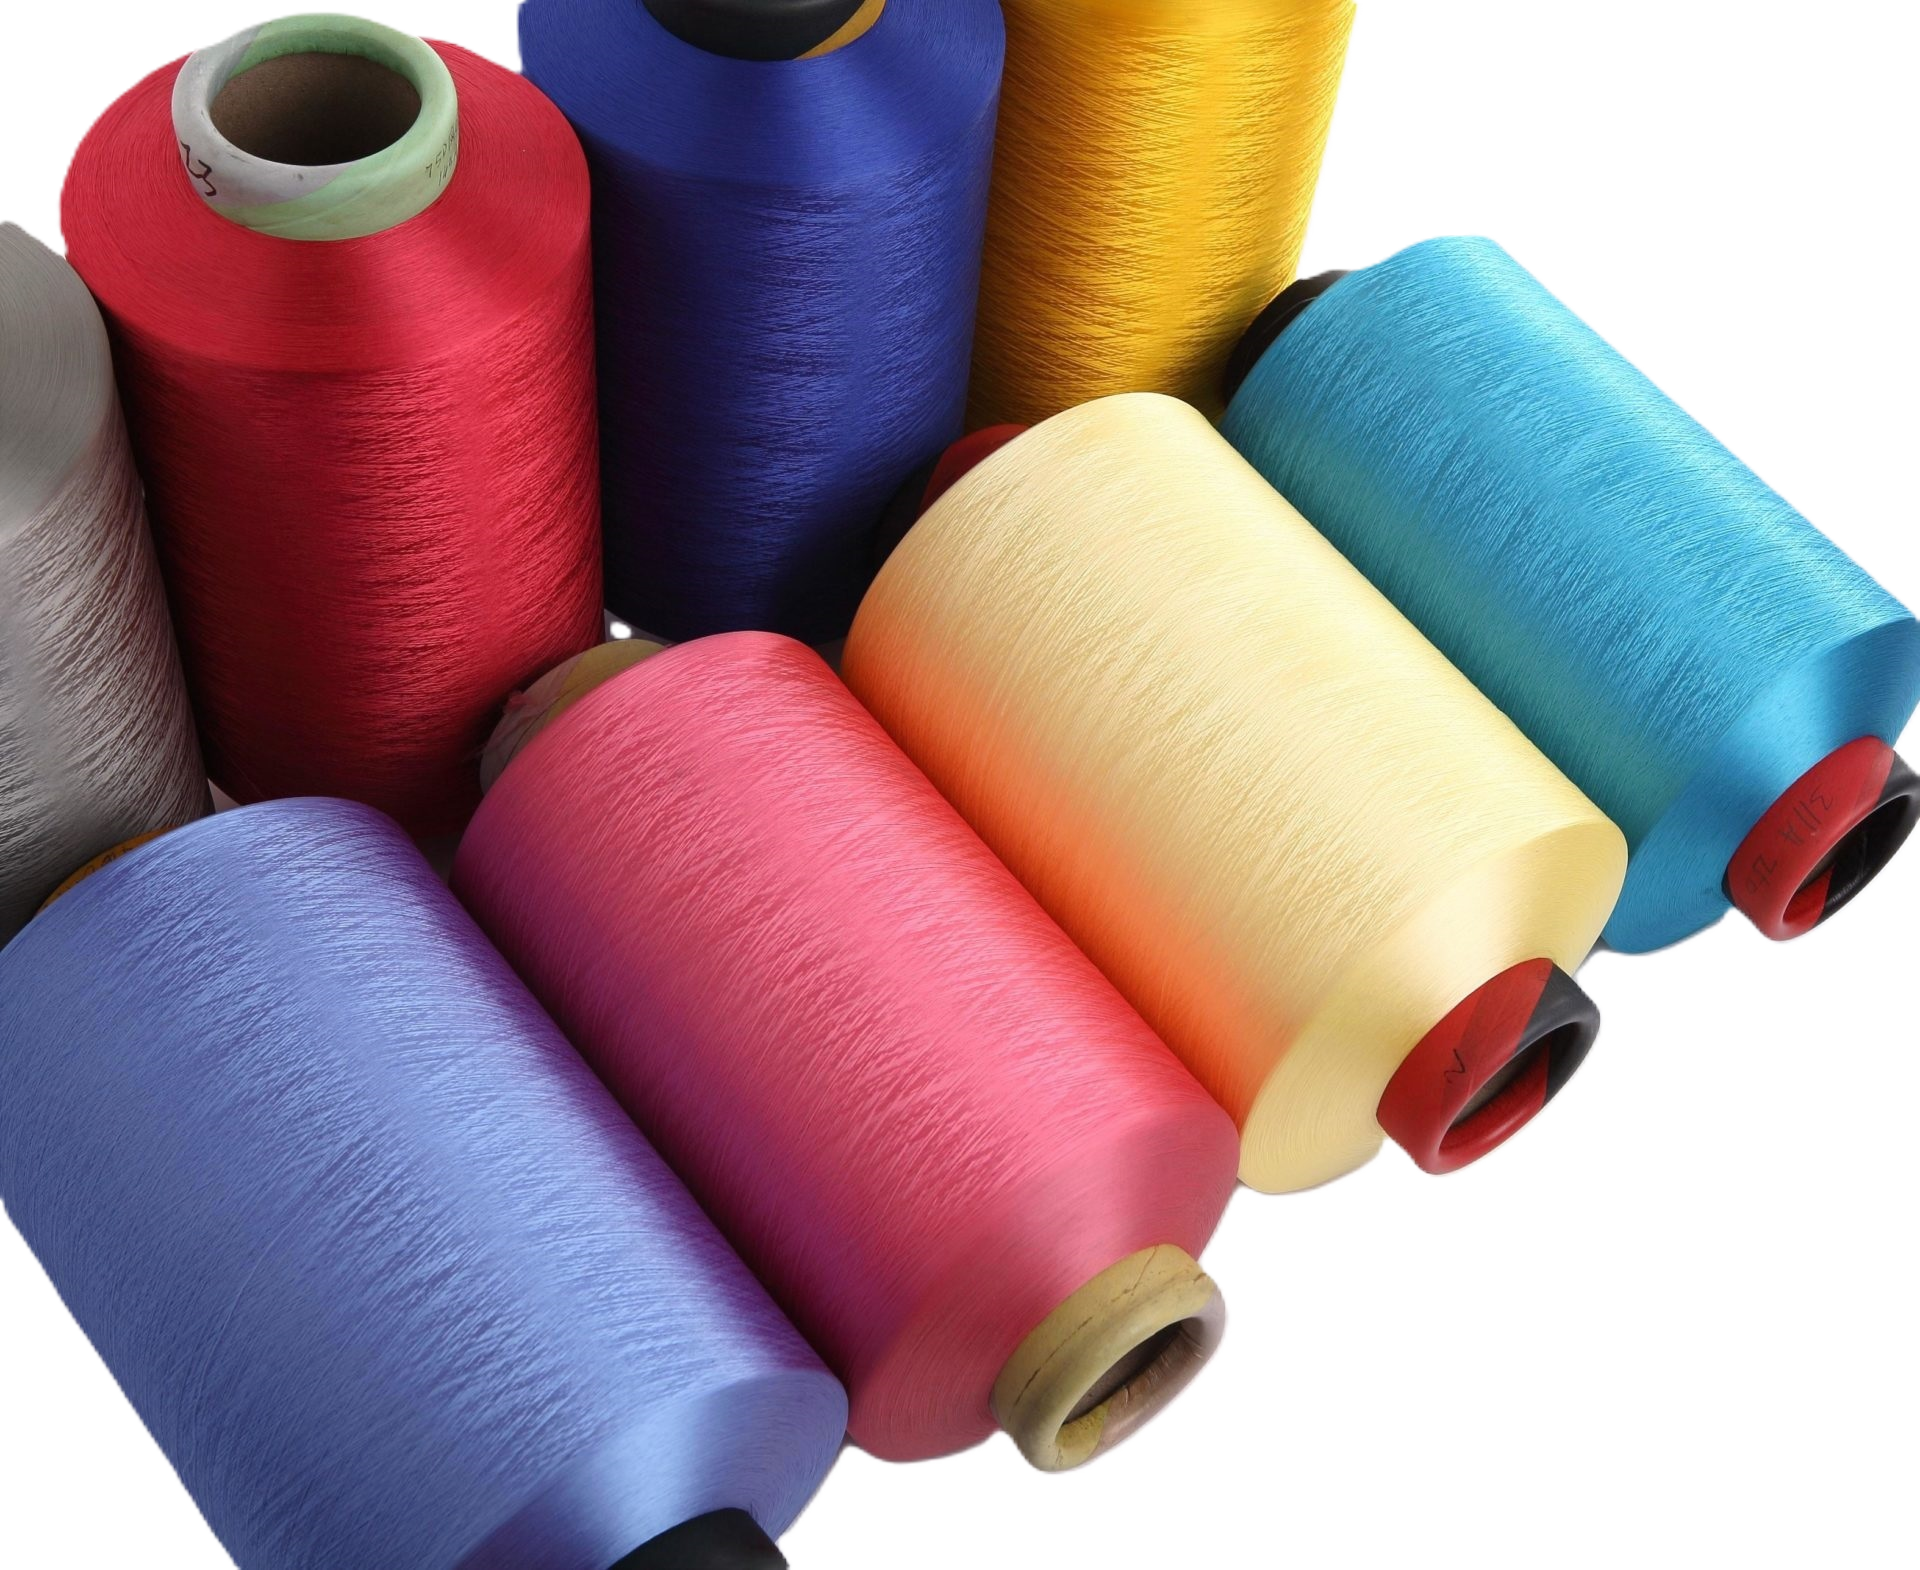 Özpancar İplik Tekstil San. Tic. LTD ŞTİ